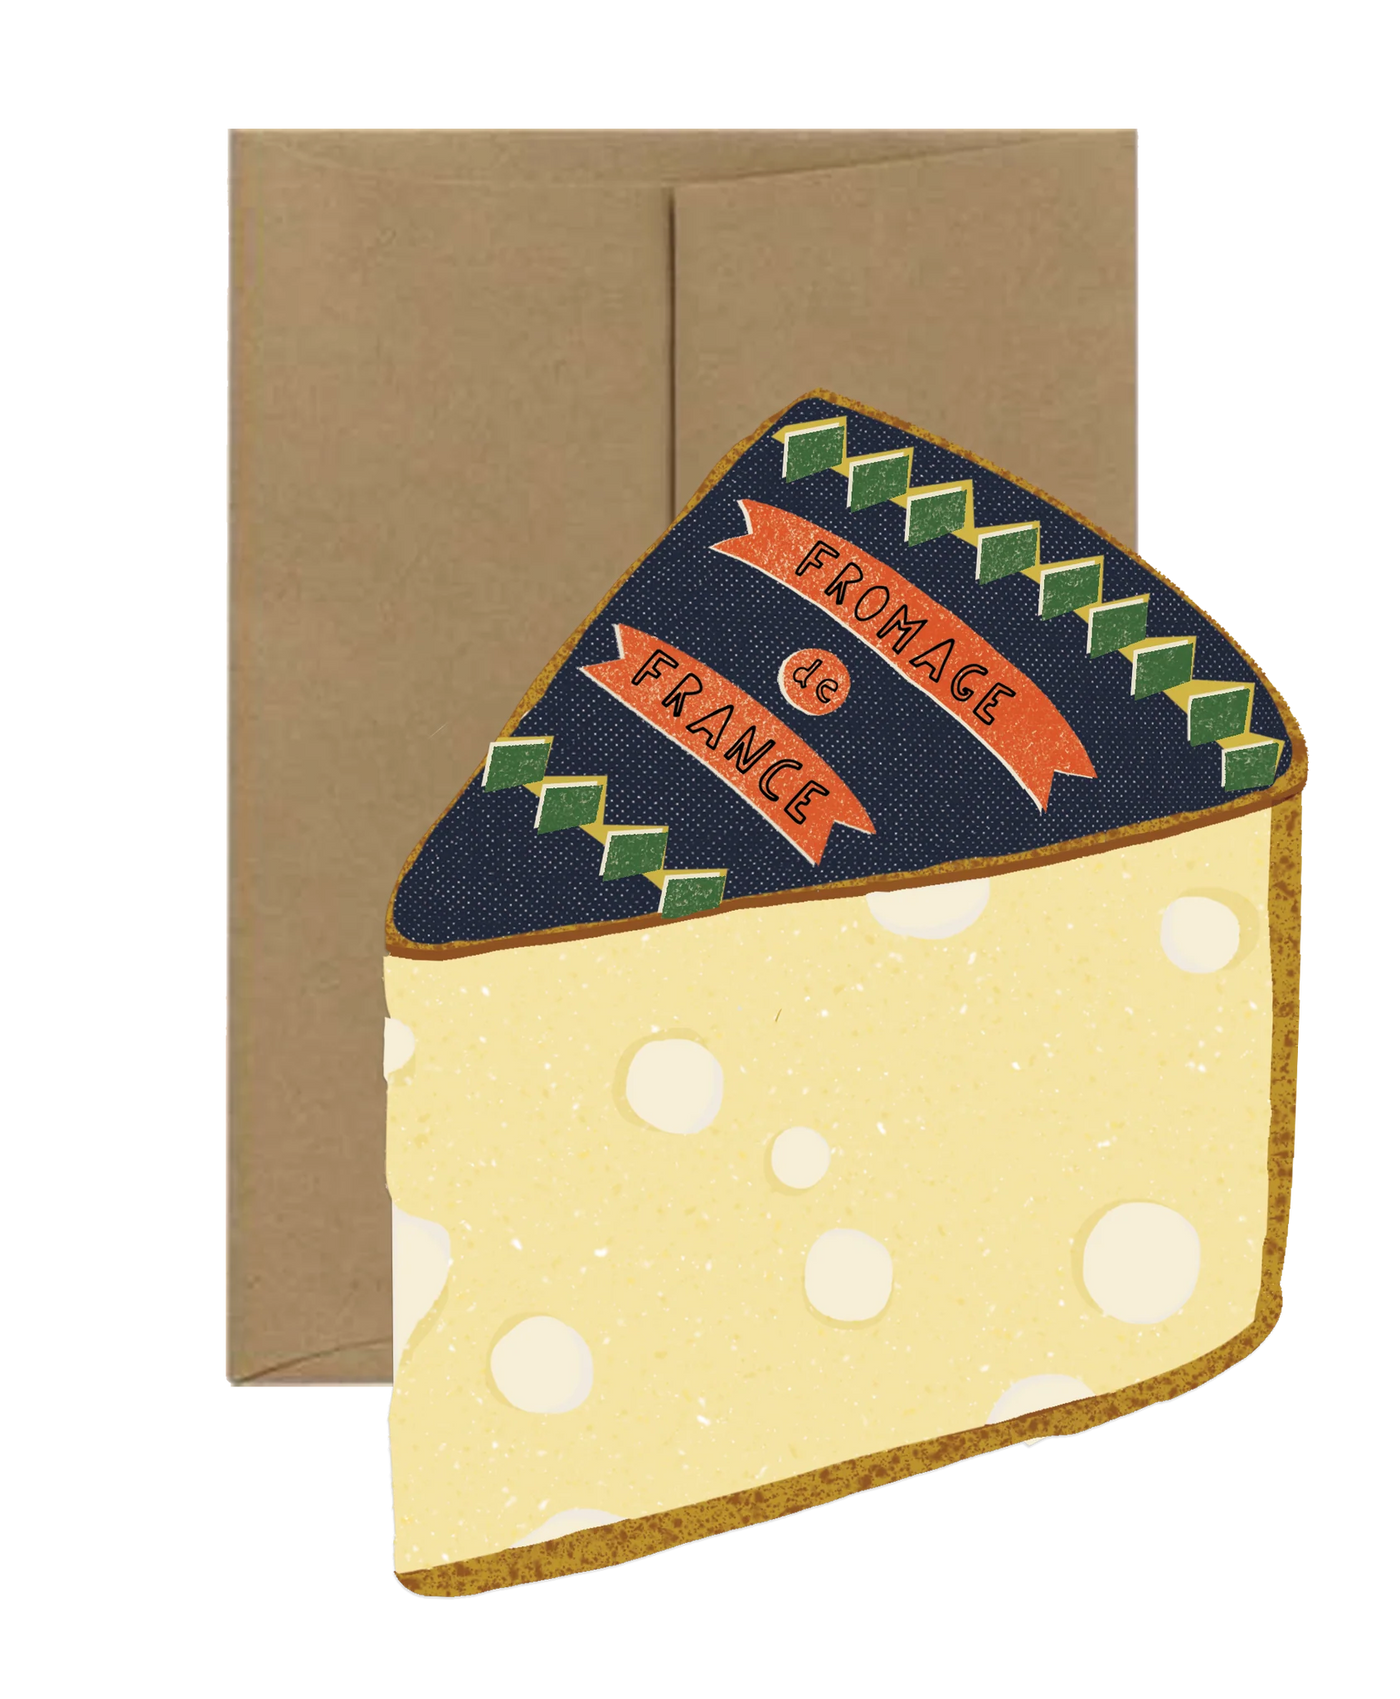 French Cheese Die Cut Card